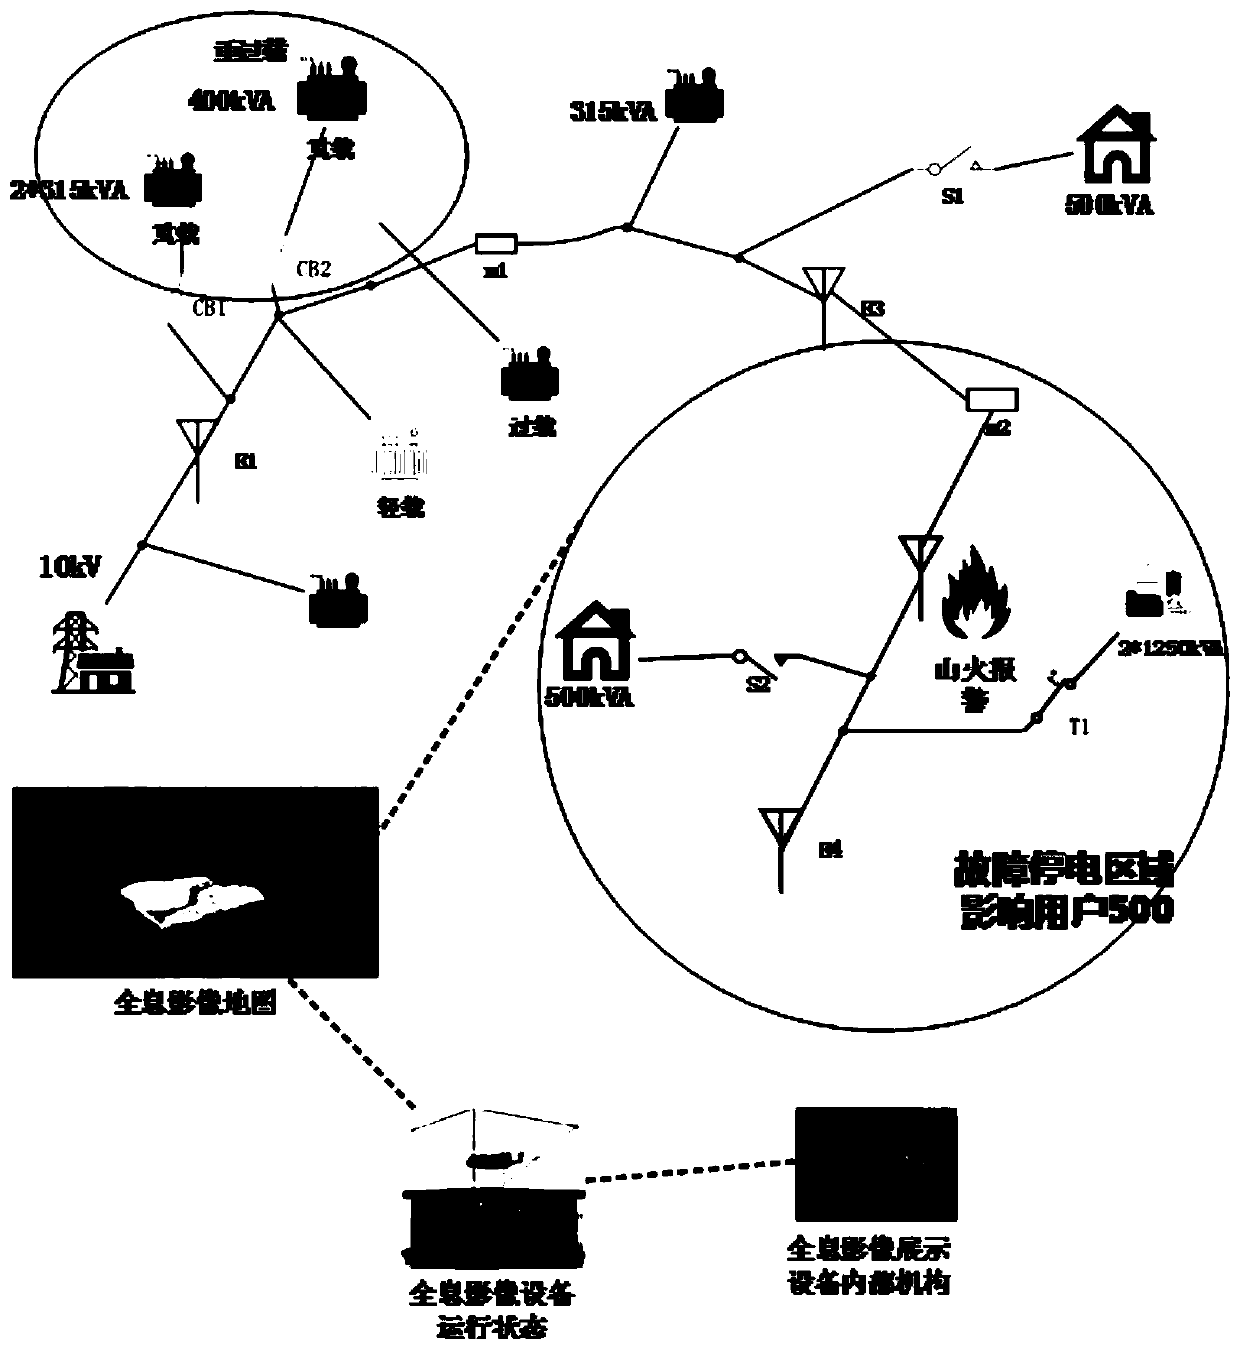 Power distribution network operation monitoring method